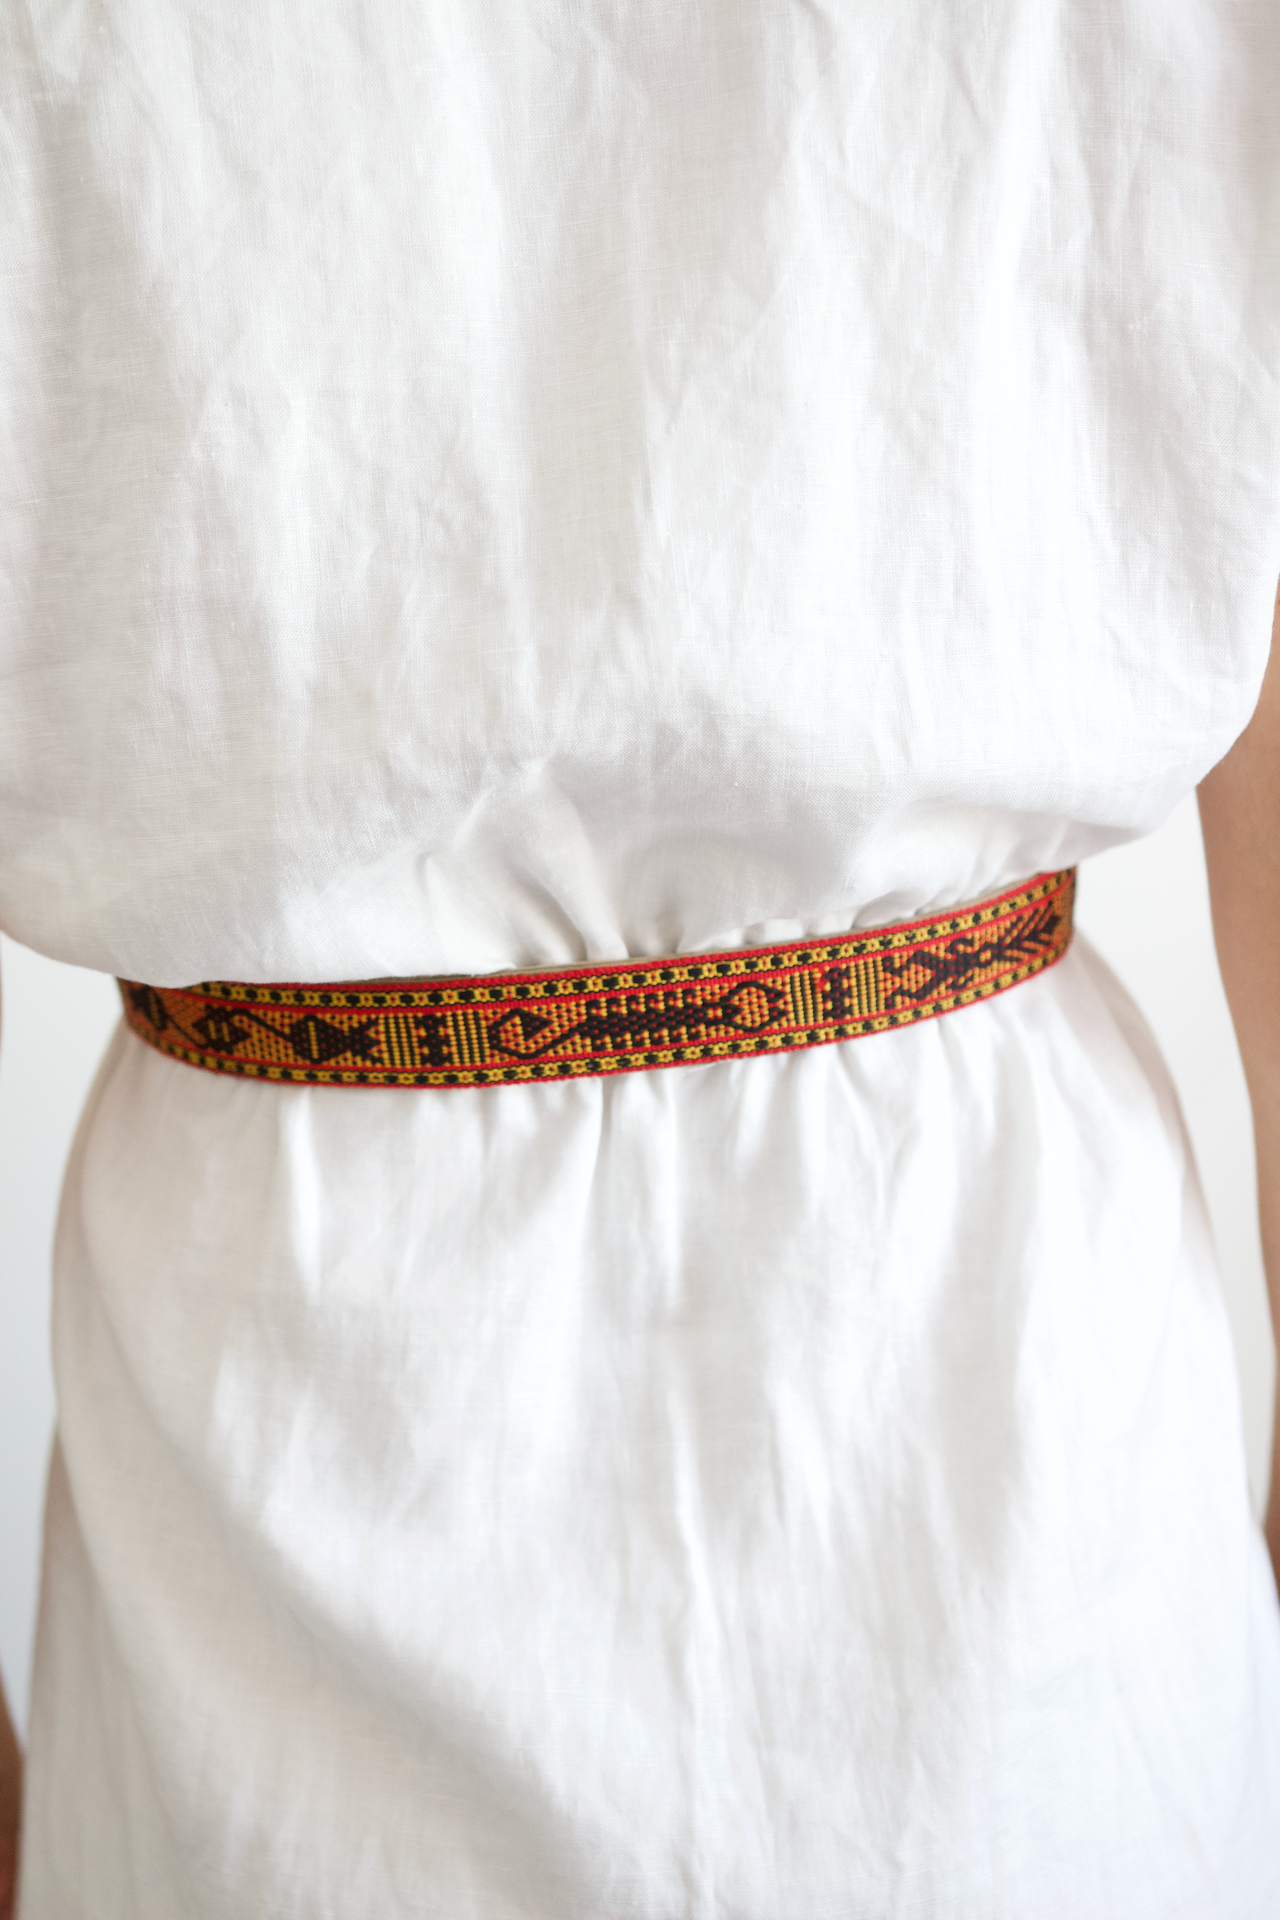 Santo Tomas Belt - Size 30 - Red